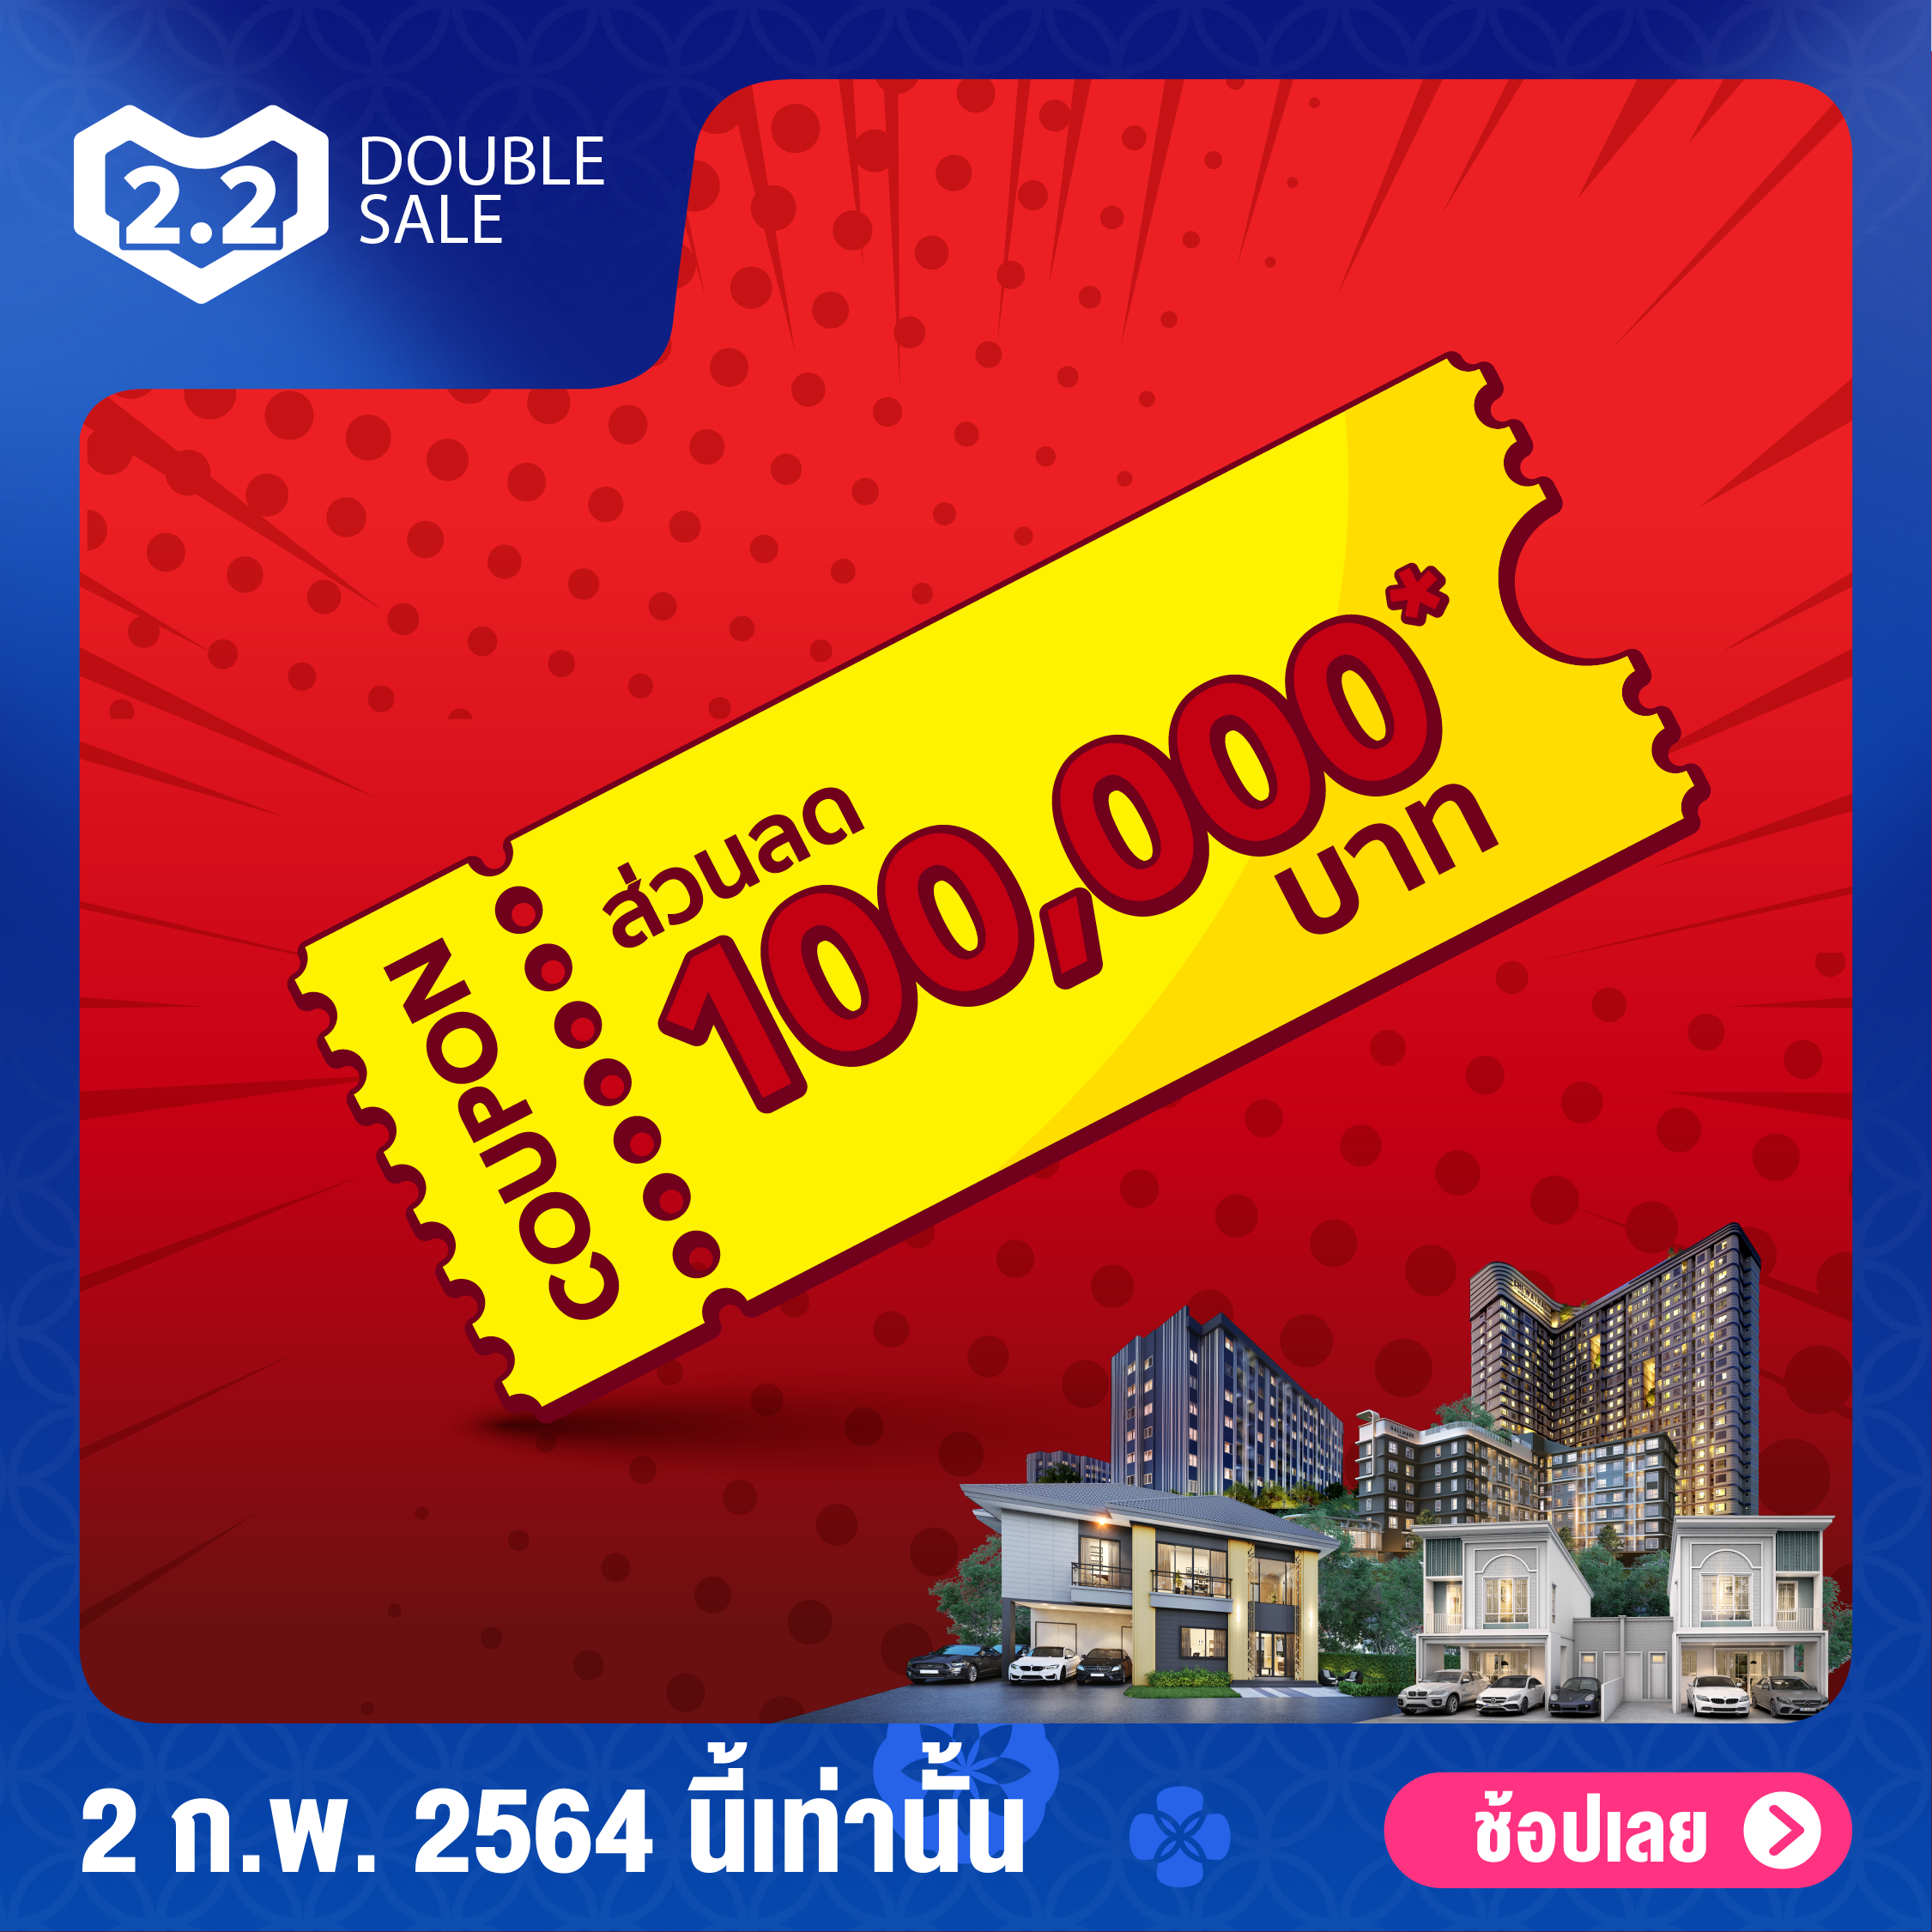 E-Voucher 444 THB for Discount 100,000 THB